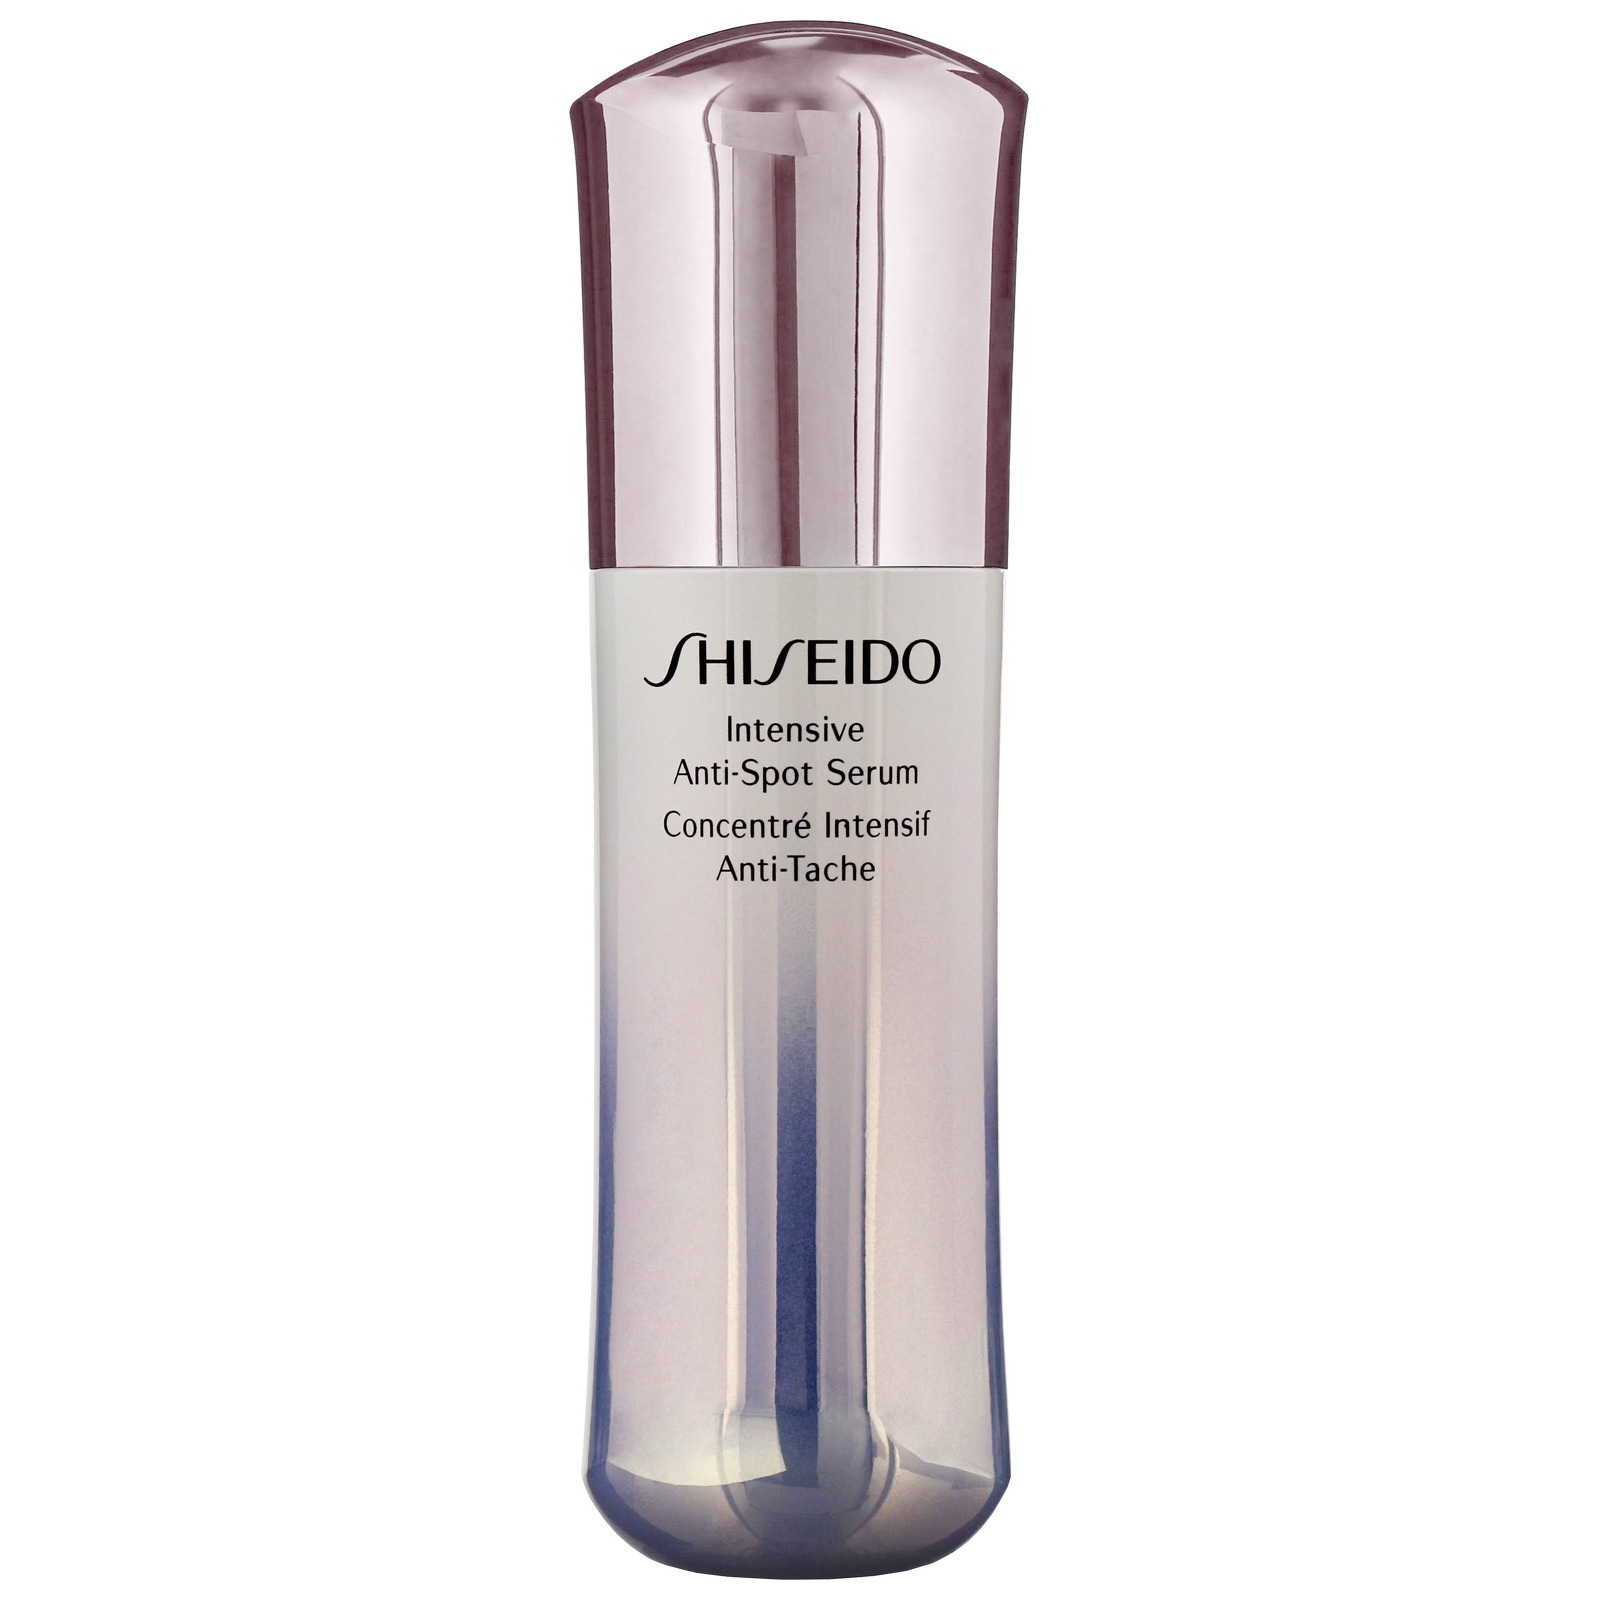 Shiseido serum. Shiseido Intensive Anti spot Serum. Shiseido Energizing Serum. Bolca Intensive spot Serum.